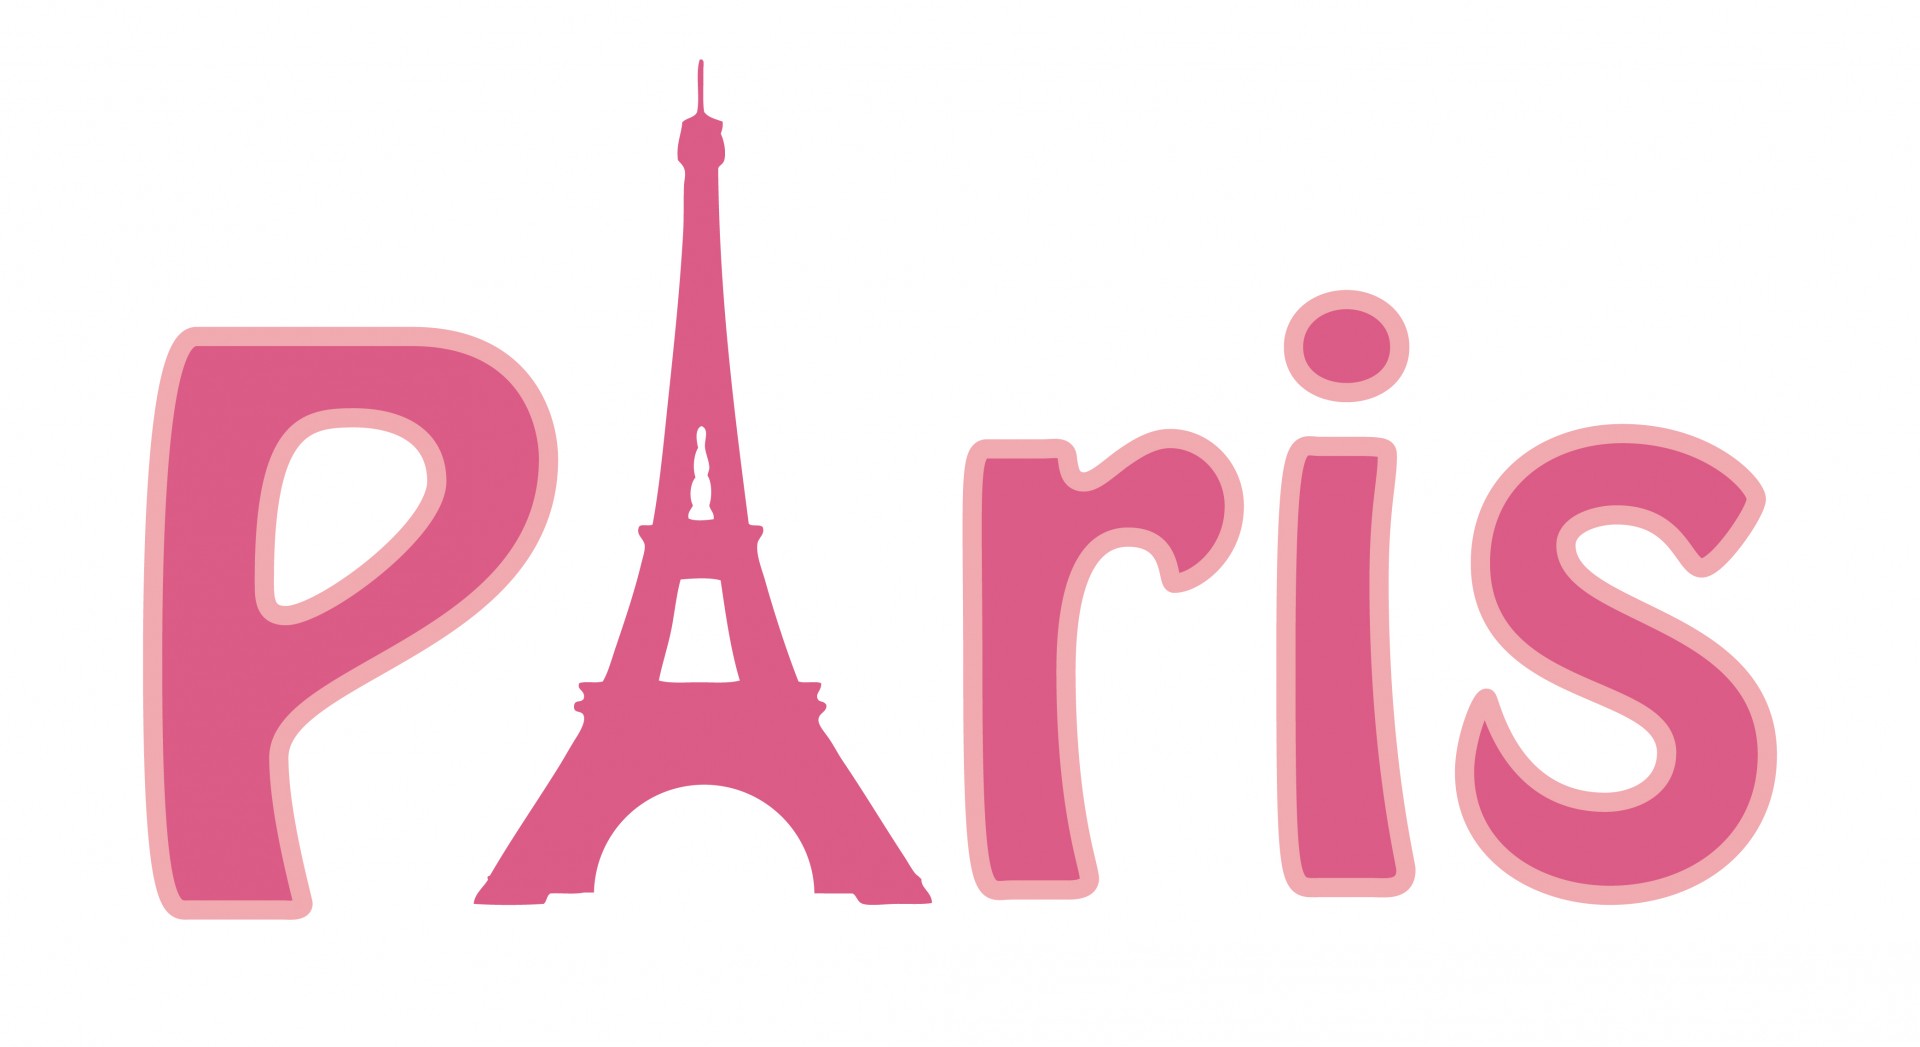 In Paris 946 Travel Download 